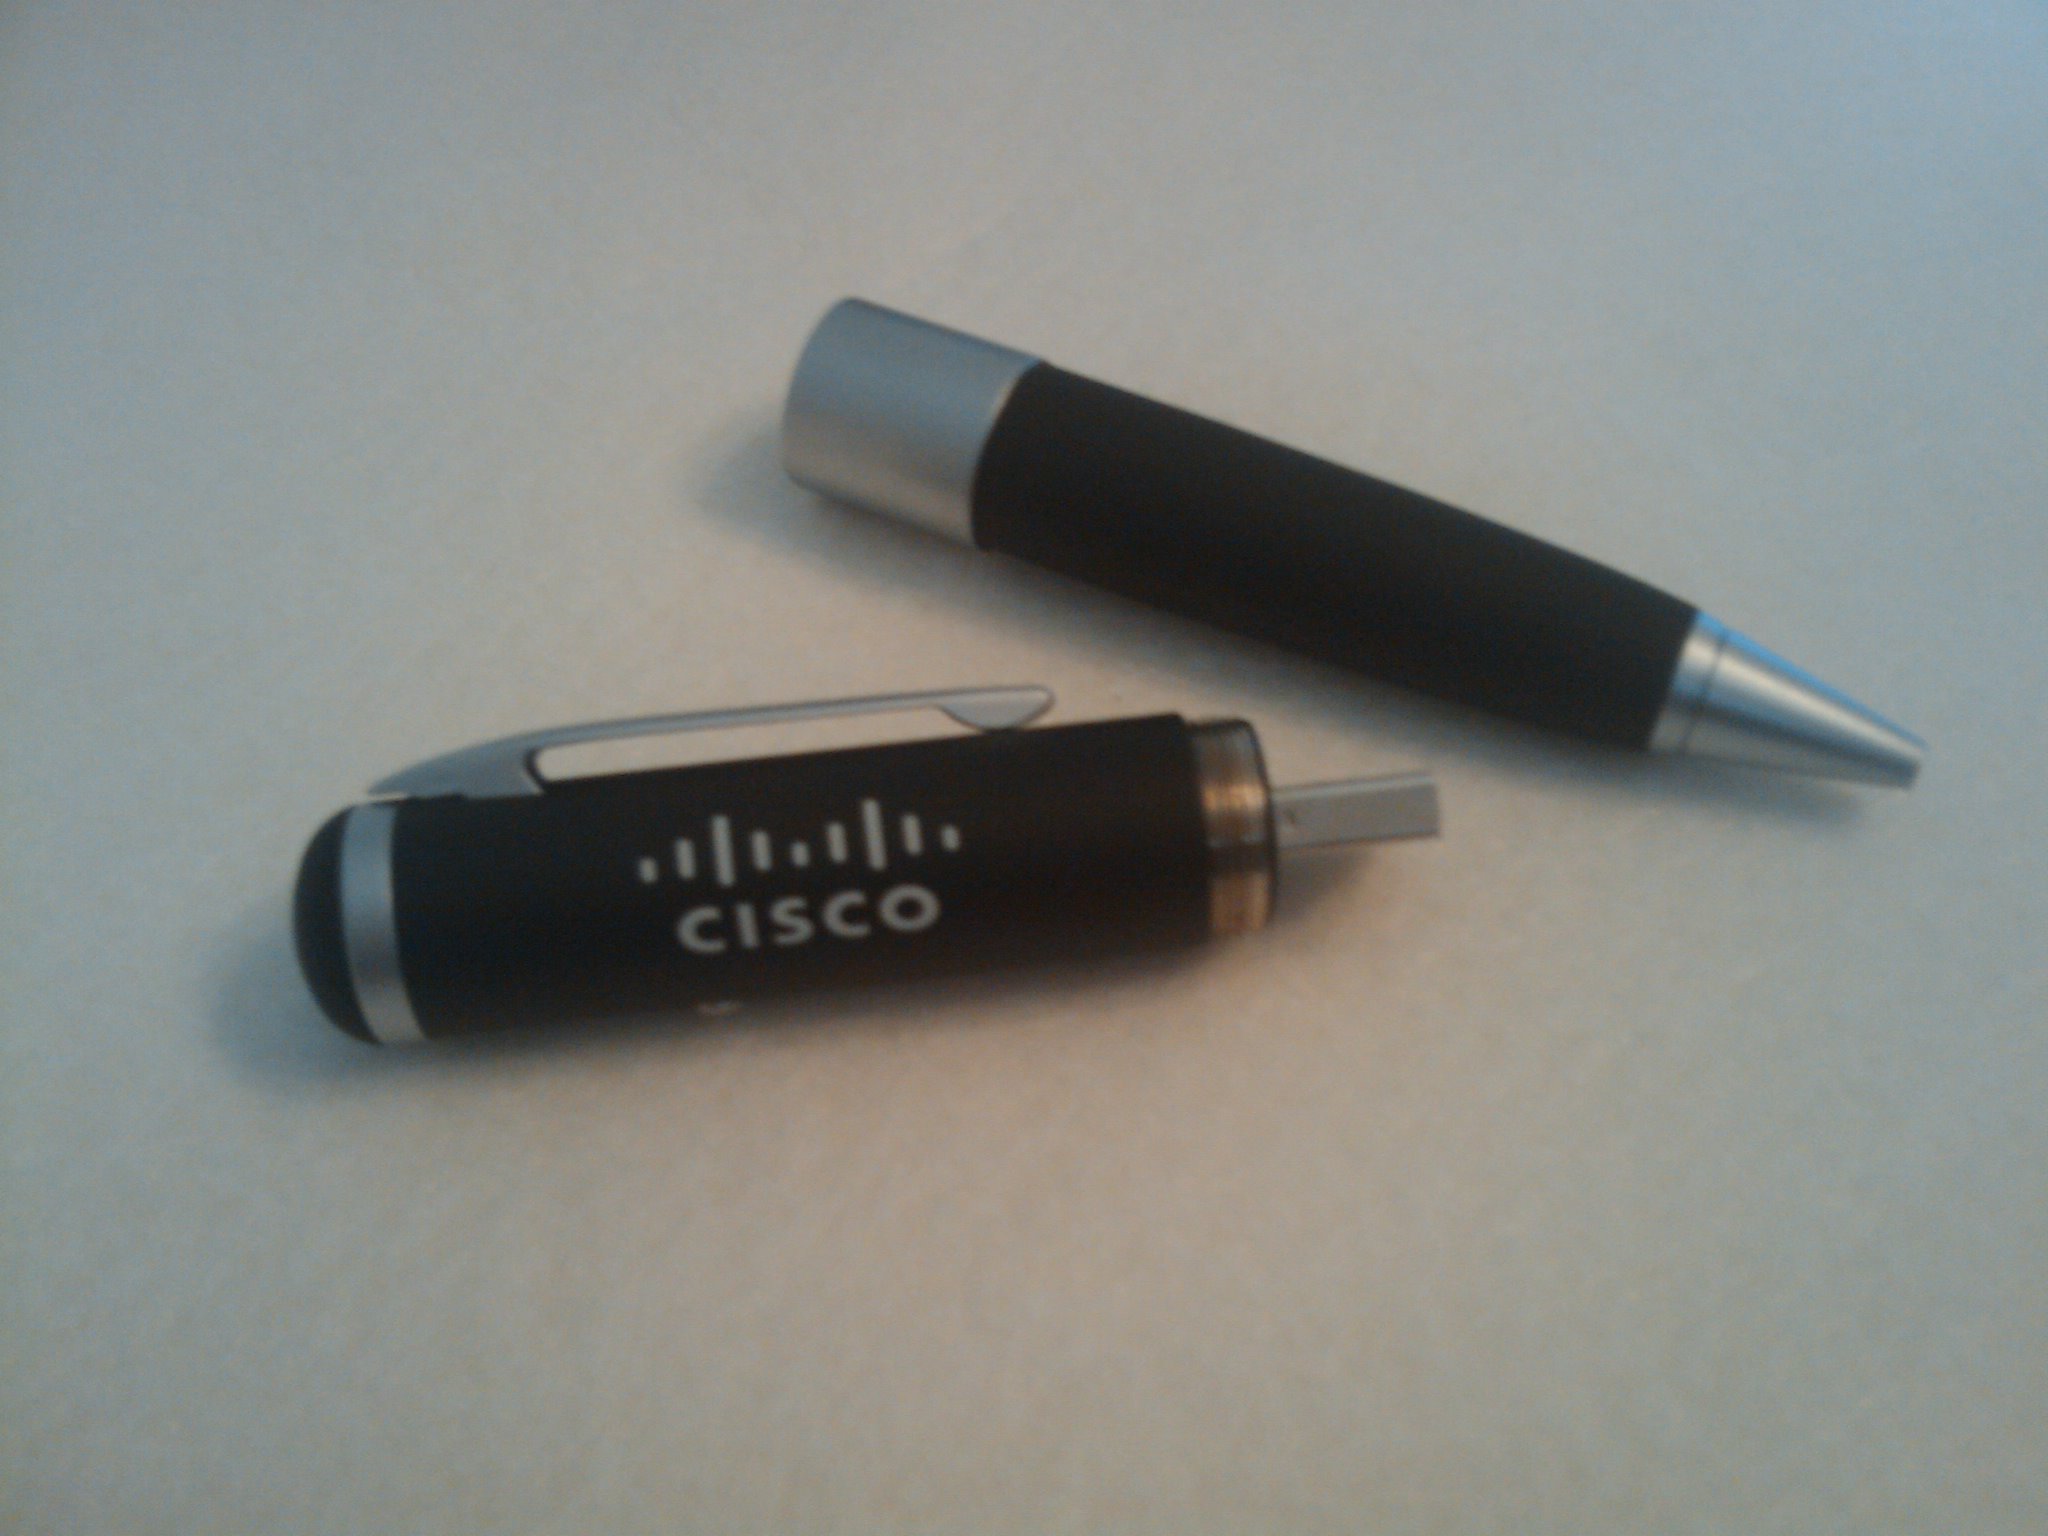 Cisco Pen Disassembled